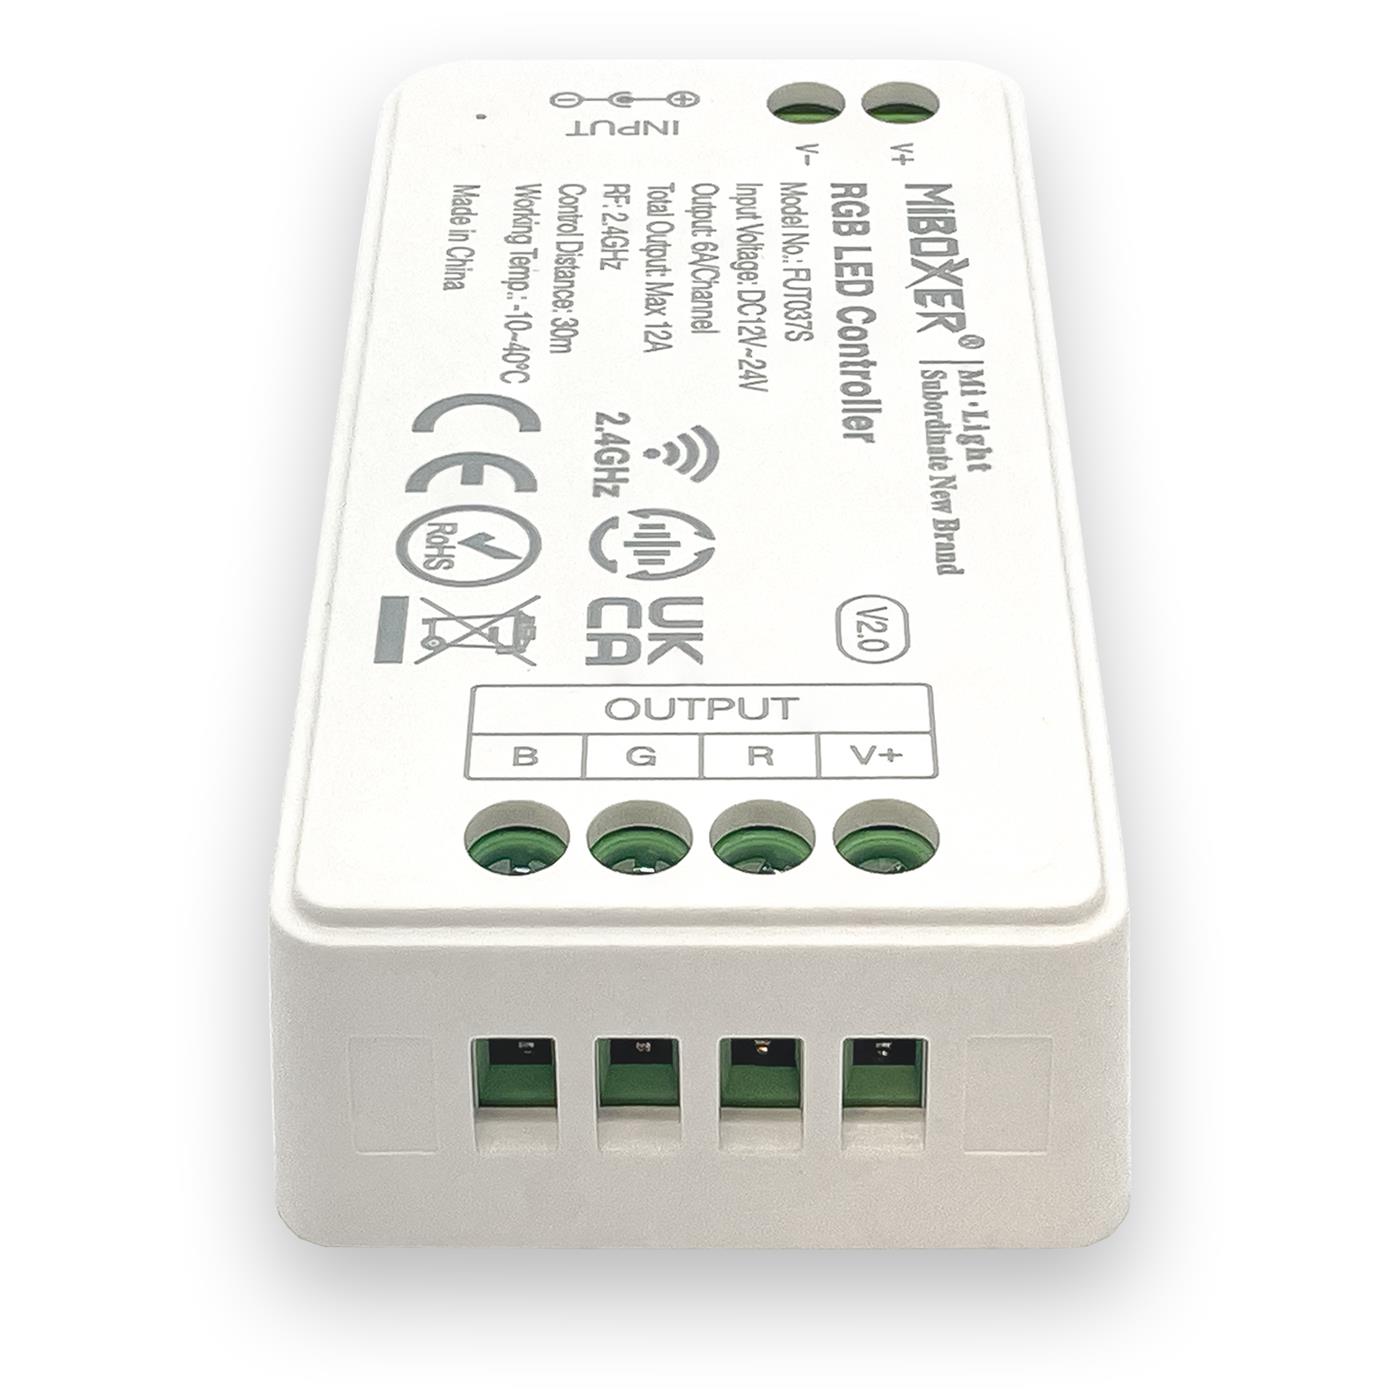 MiLight MiBoxer RGB LED 4-Zone Empfänger WLAN + RF 2,4GHz Controller